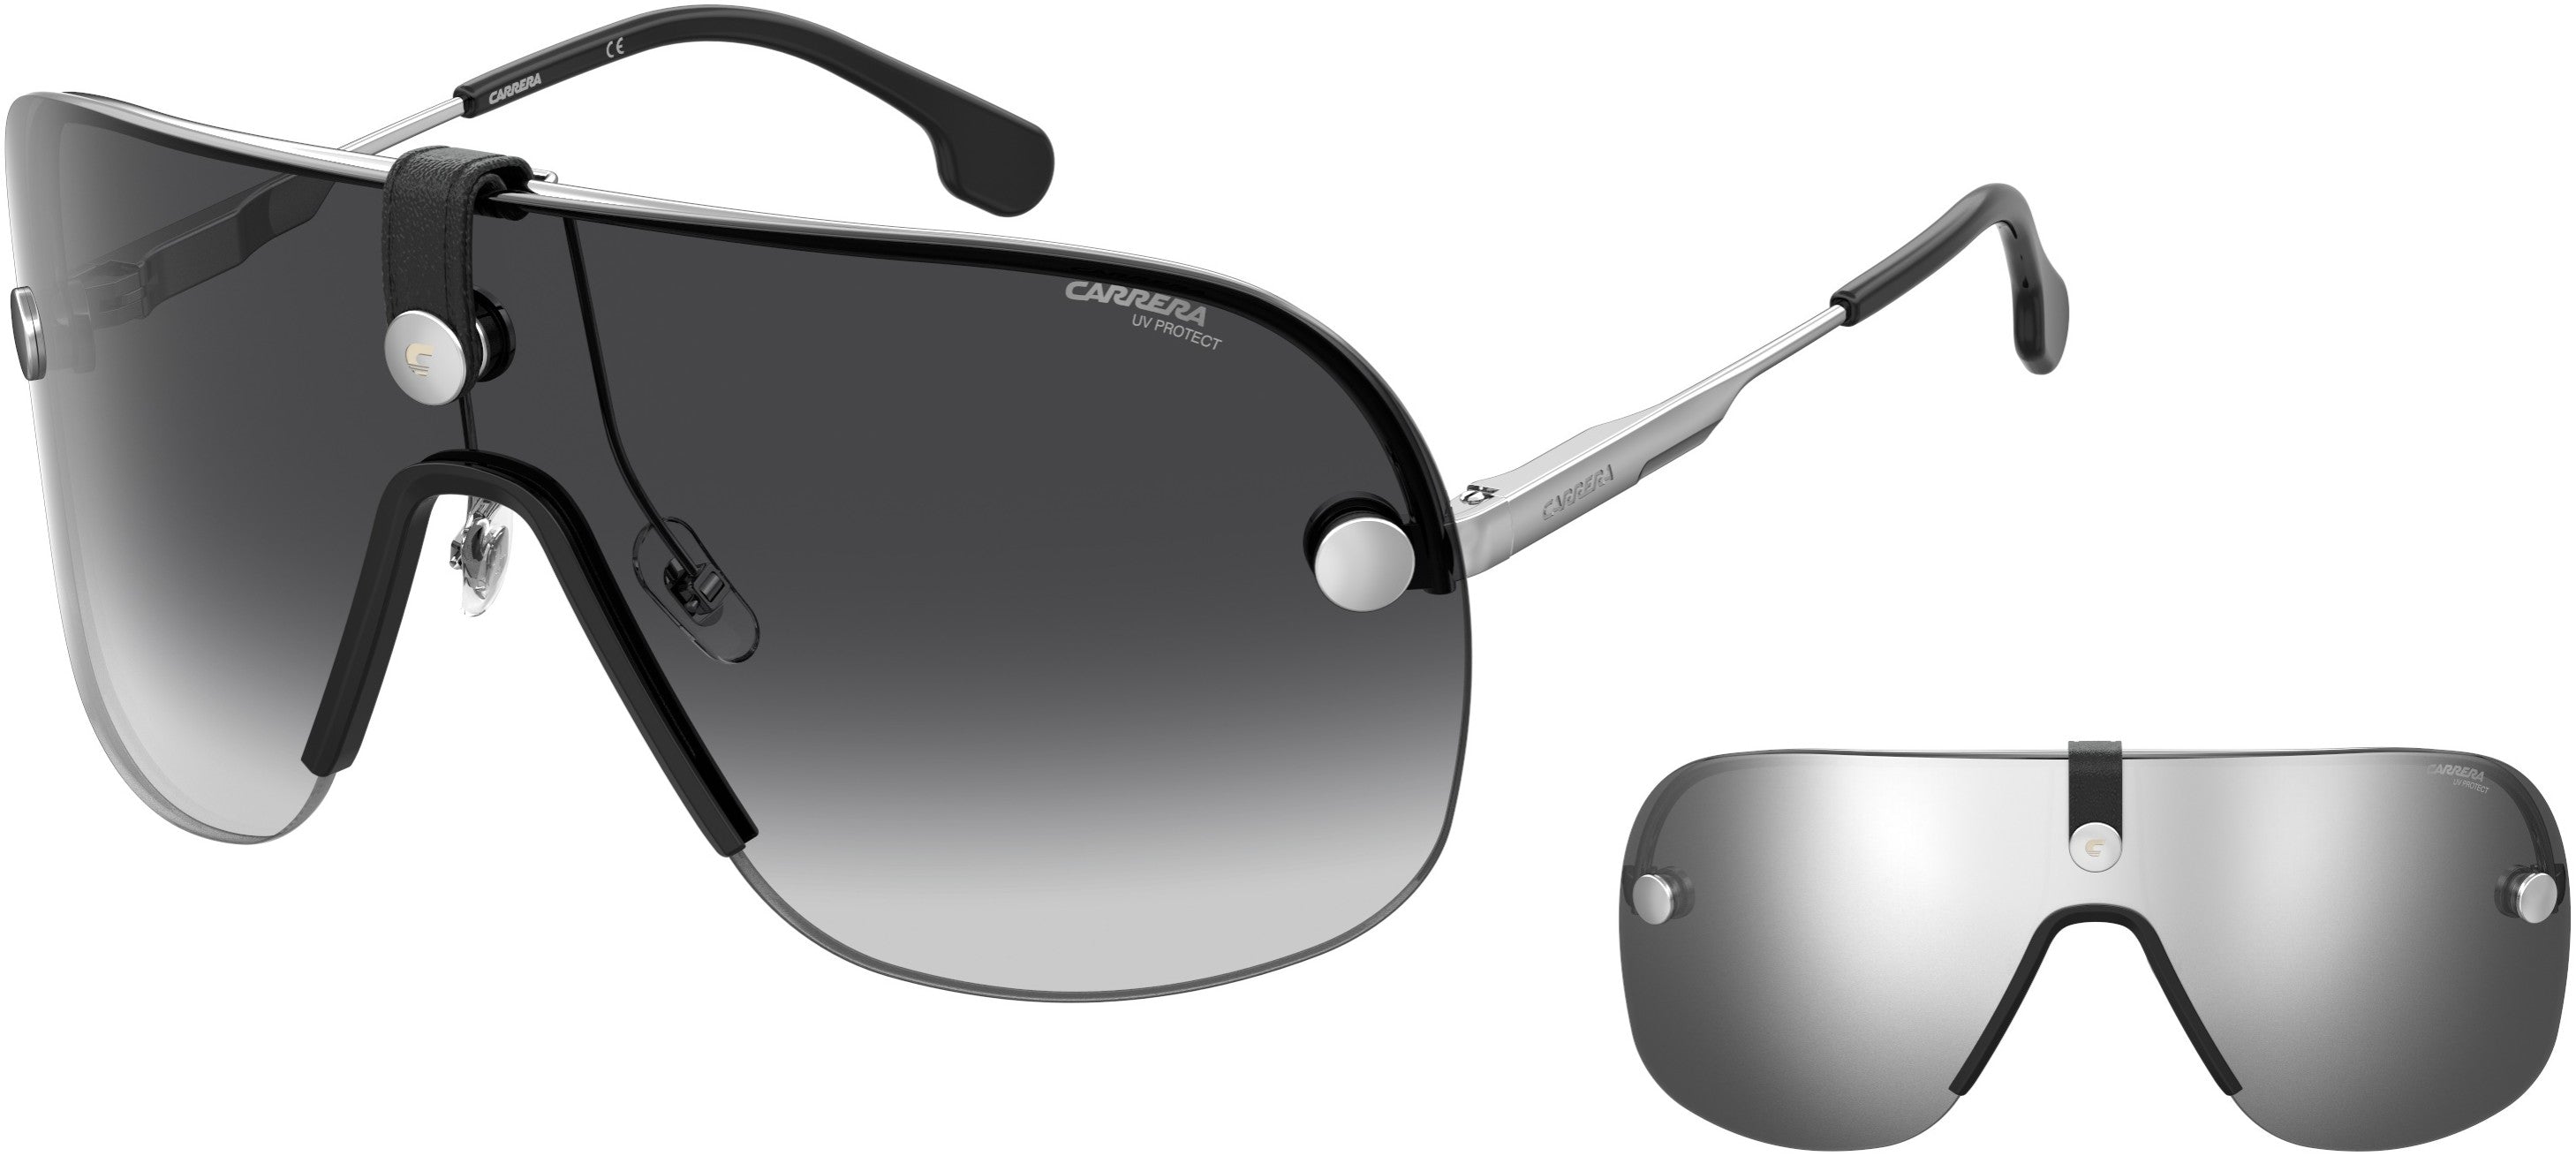  Carrera Epica Ii Rectangular Sunglasses 0010-0010  Palladium (9O Dark Gray Gradient)